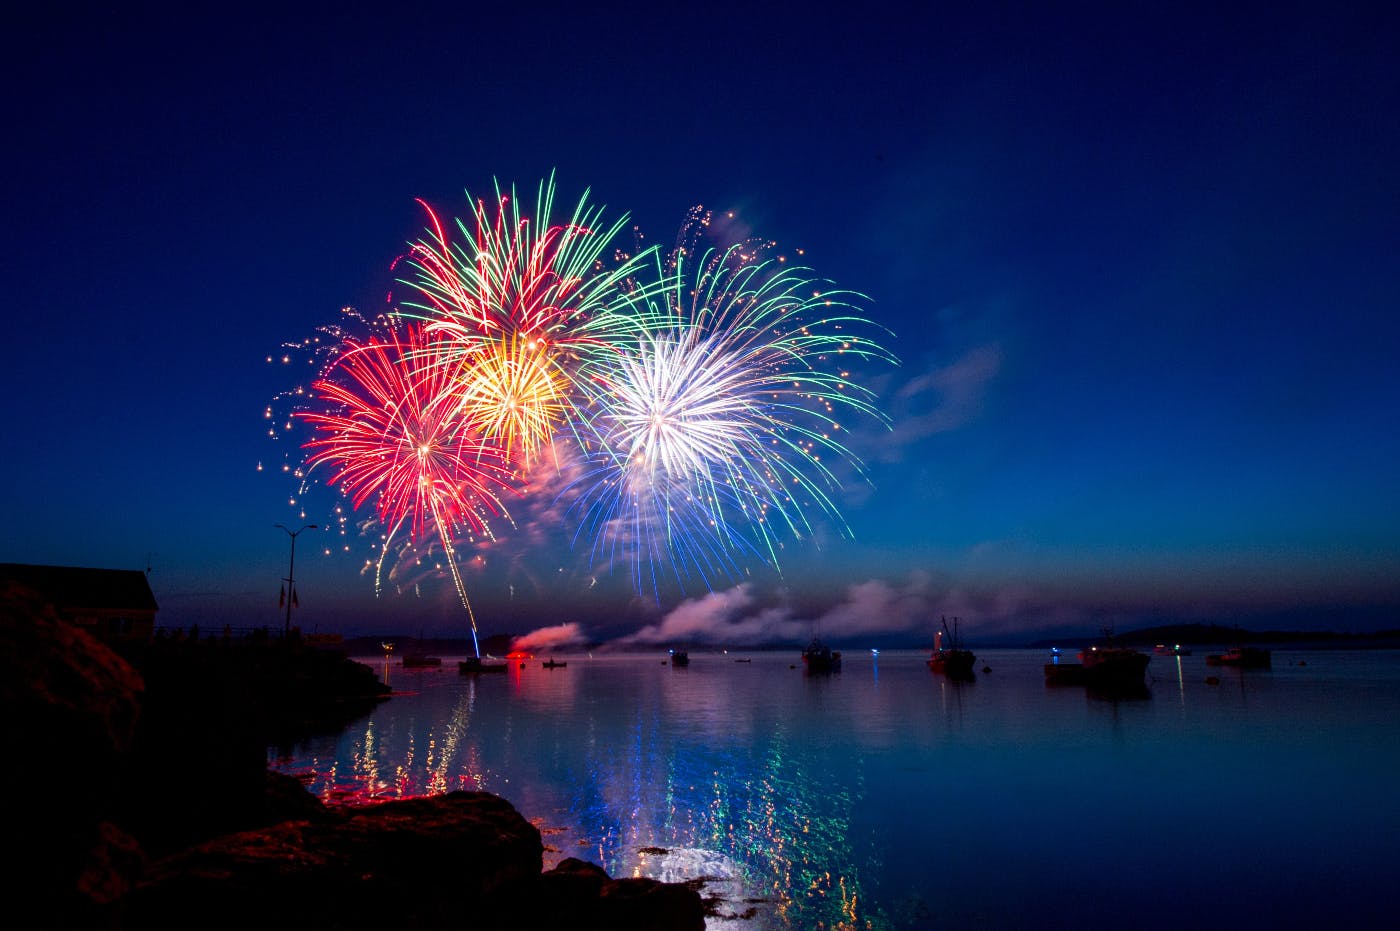 Fireworks over a harbor